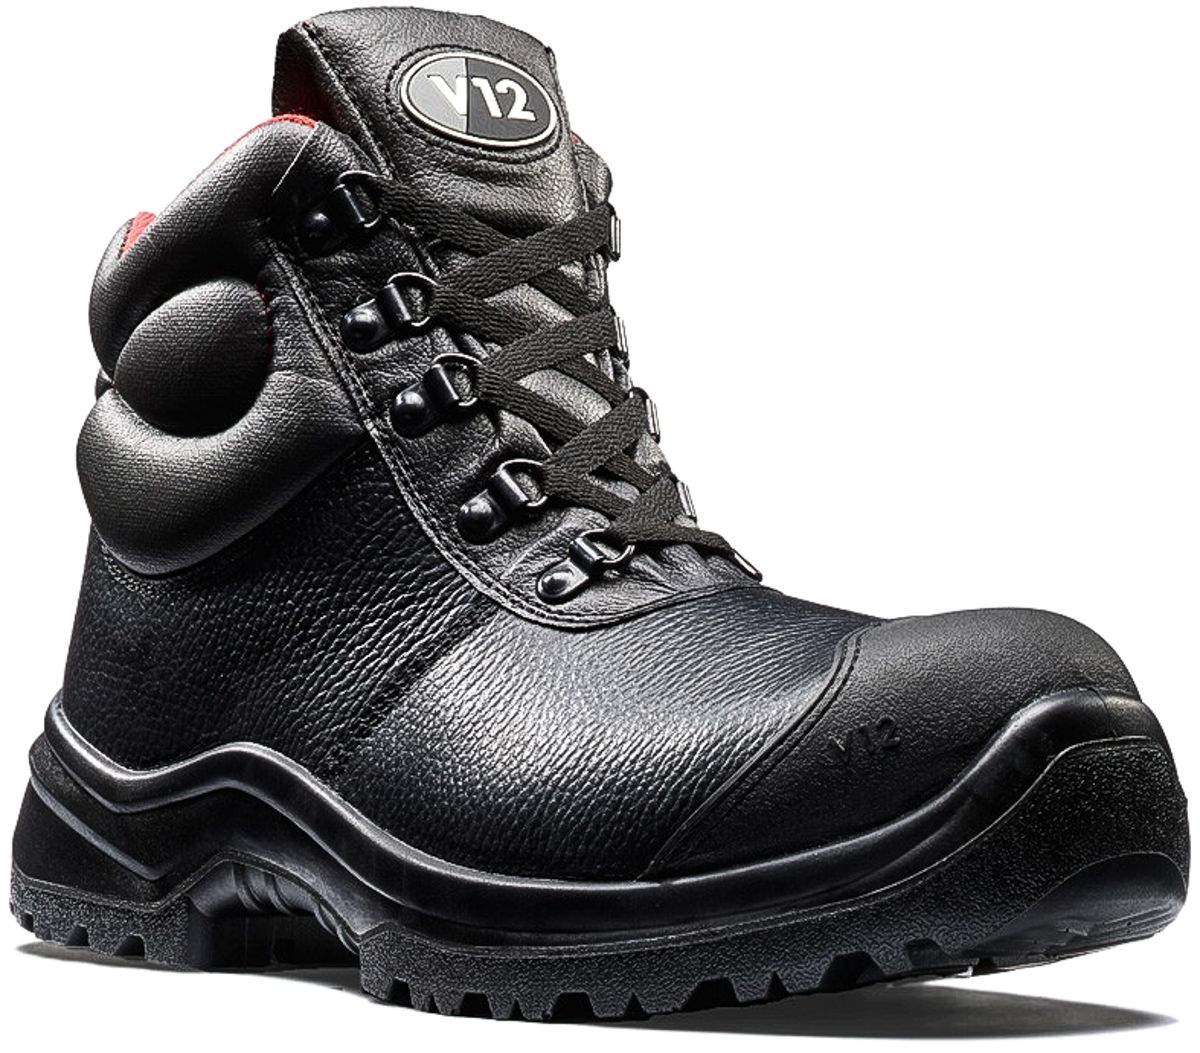 V12 Footwear Rhino Black Composite Toe Capped Safety Boots, UK 10, EU 44